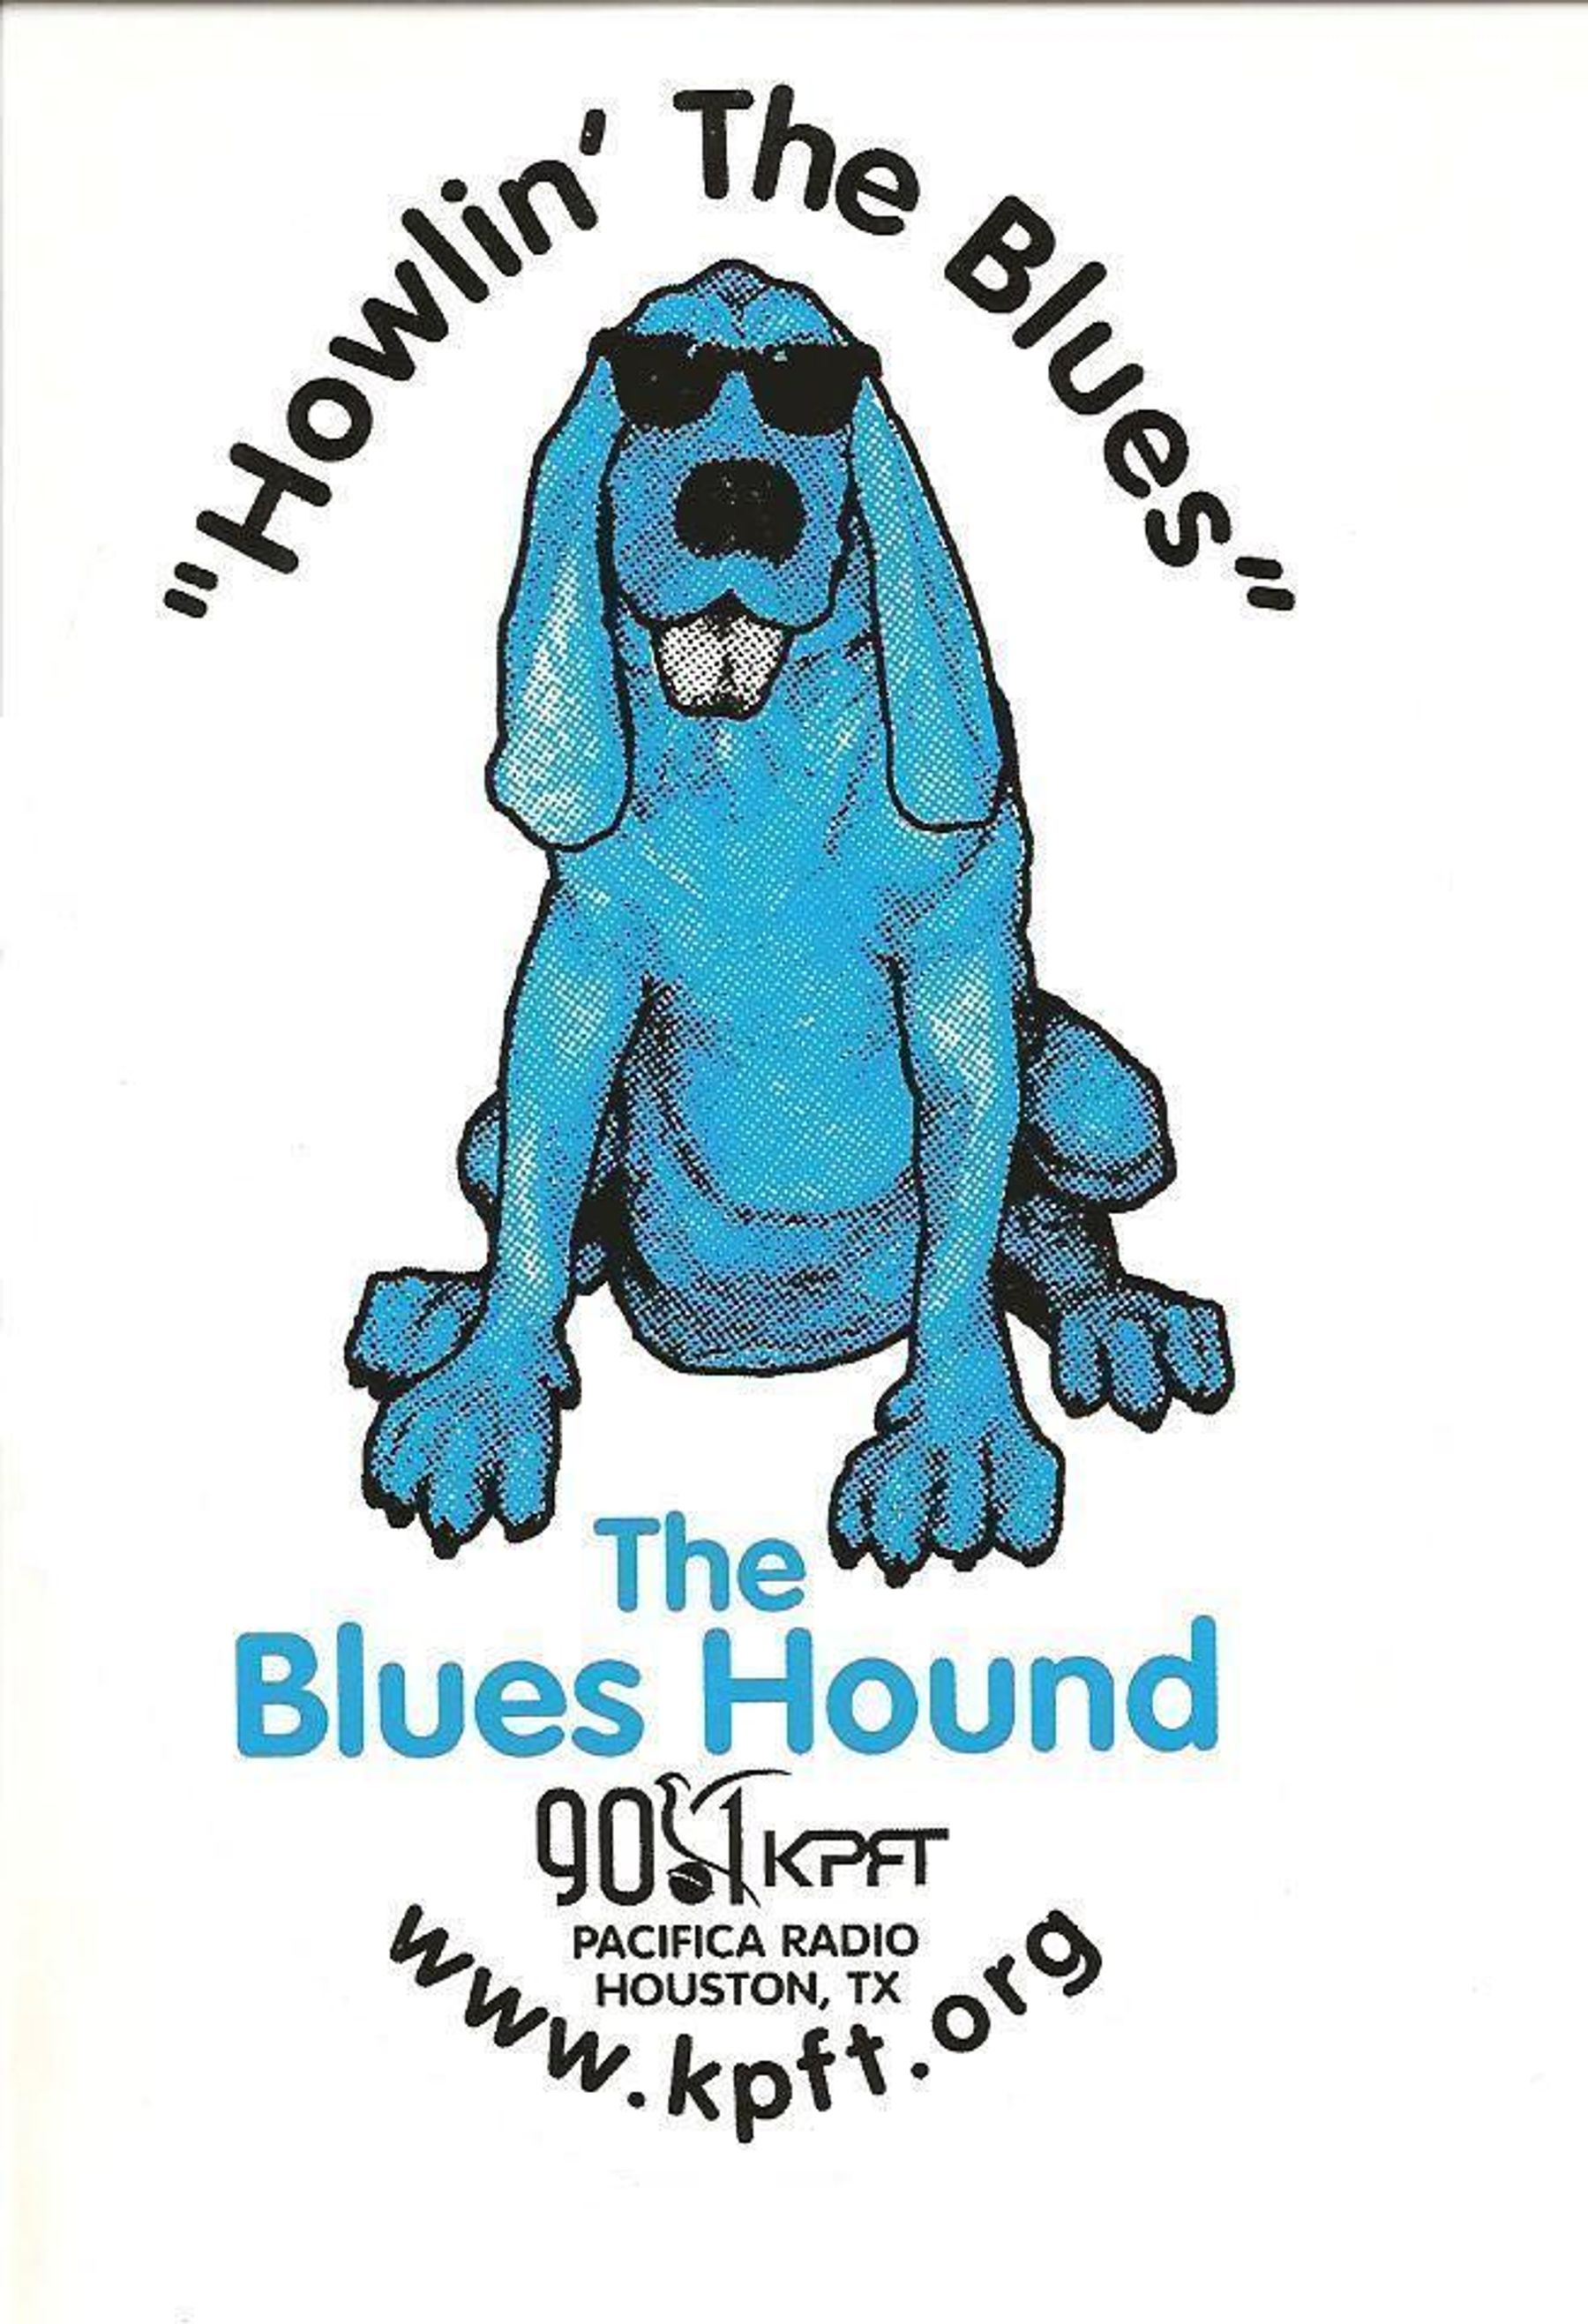 The Blues Hound Music Calendar